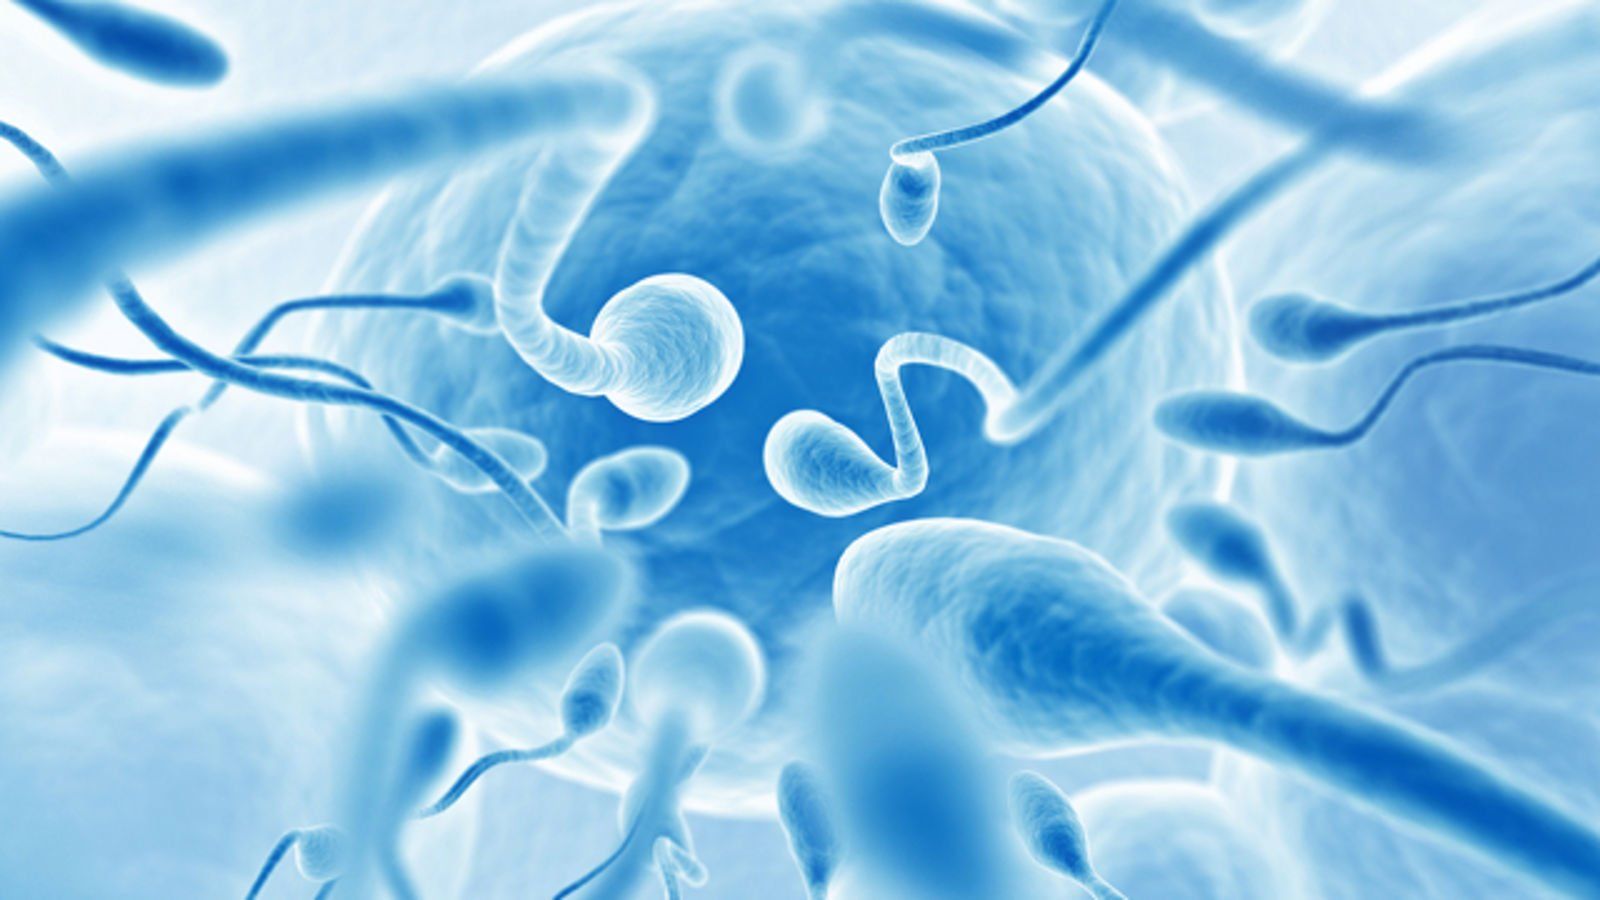 Skittle recommendet Human sperm cells